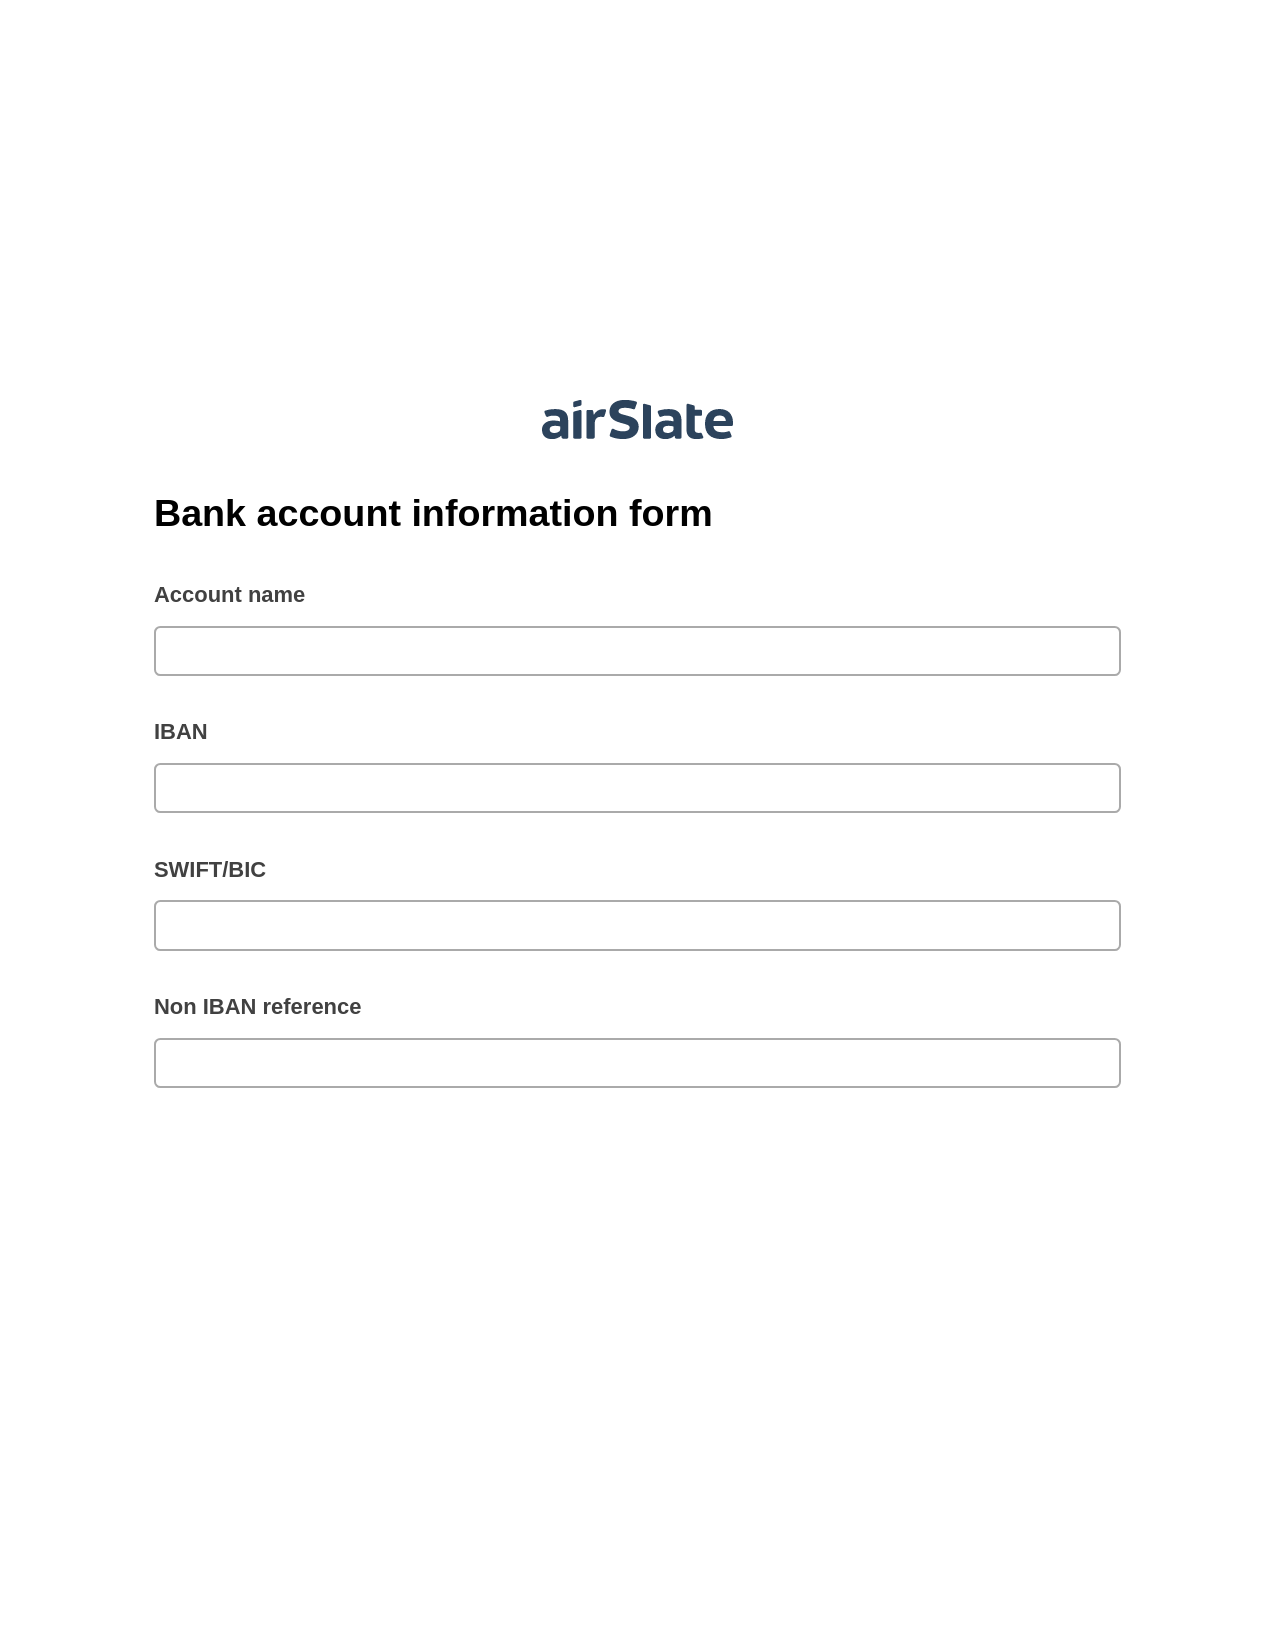 Bank account information form Pre-fill from Google Sheet Dropdown Options Bot, Slack Notification Bot, OneDrive Bot